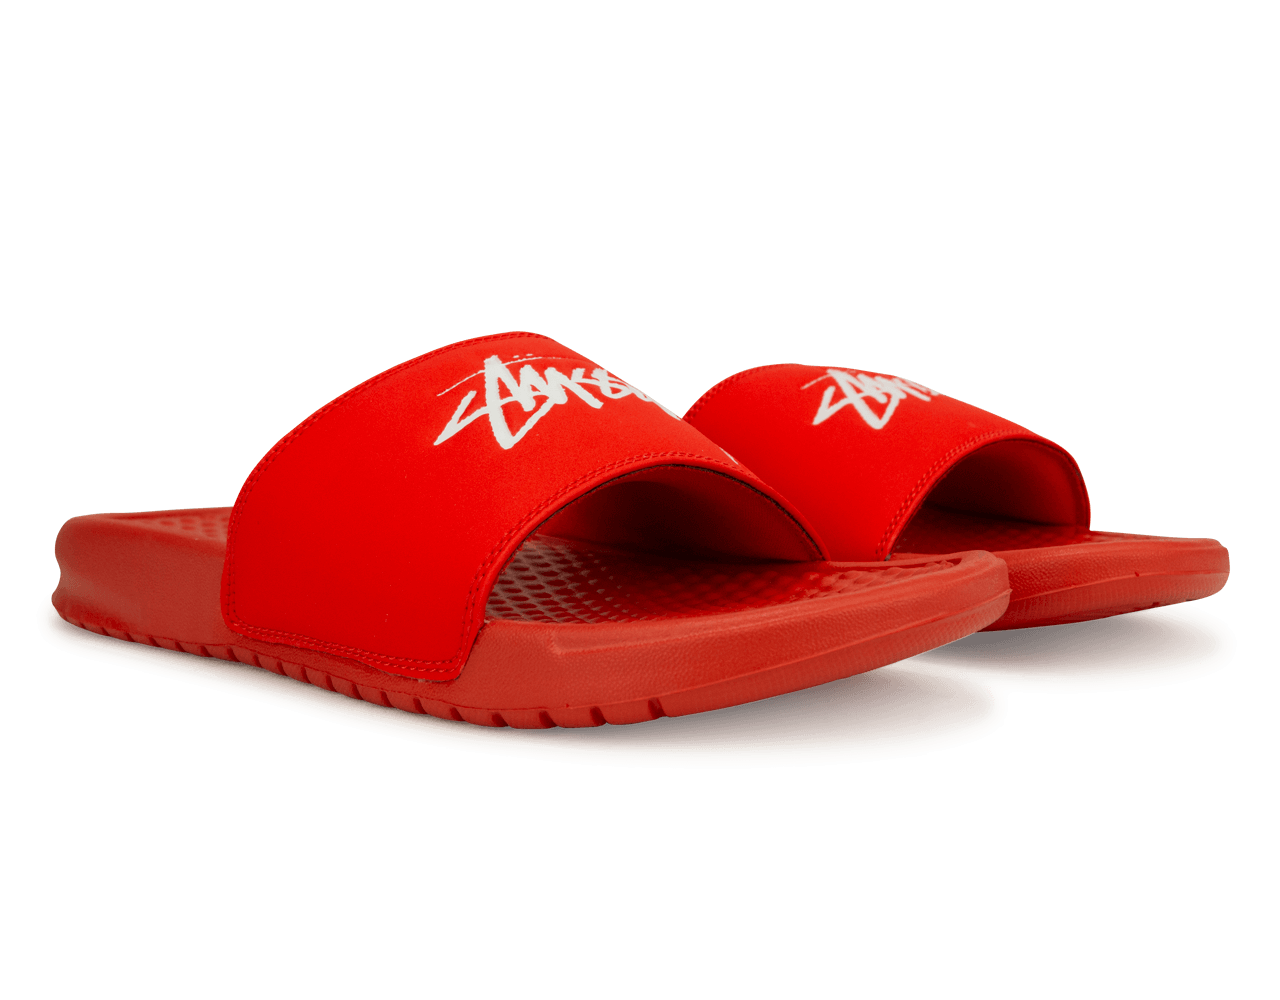 Nike Men's Benassi Stussy Sandal Red/White Together